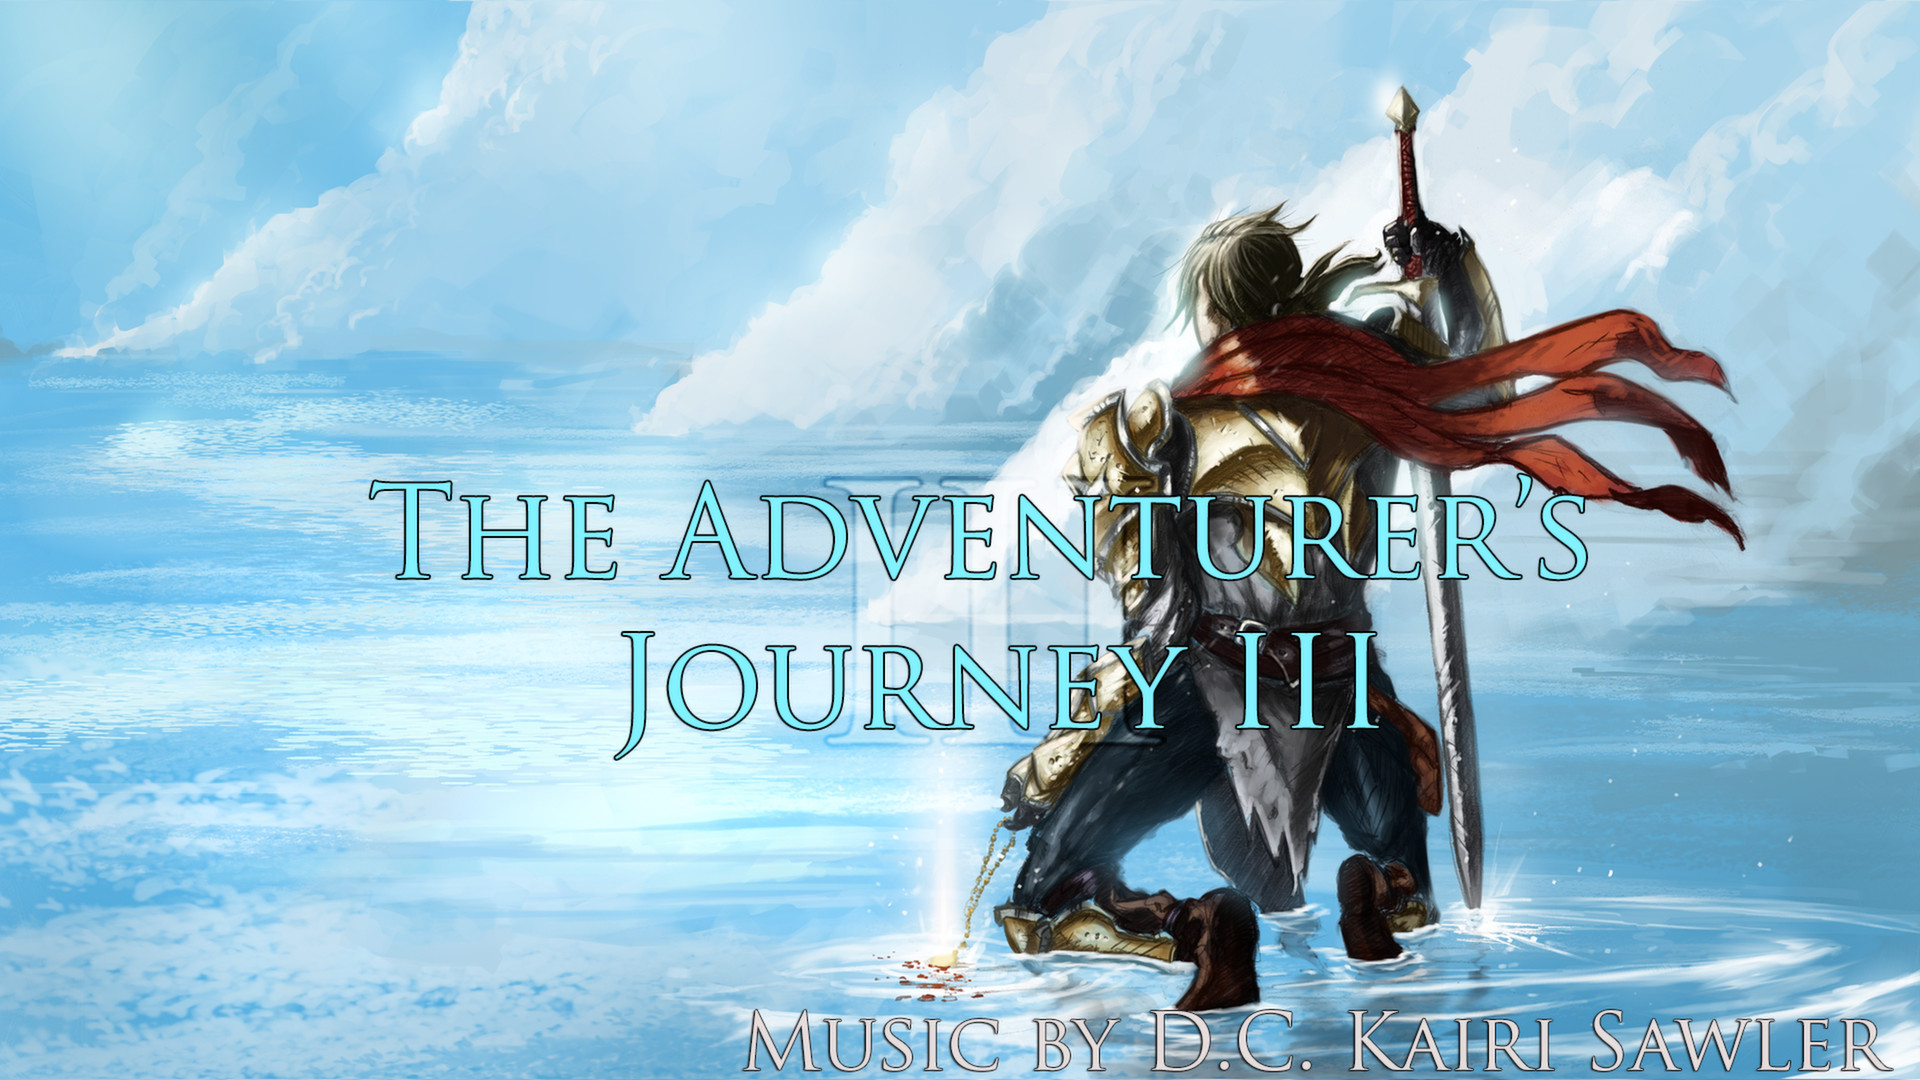 RPG Maker VX Ace - The Adventurer's Journey III DLC Steam CD Key [$ 4.51]